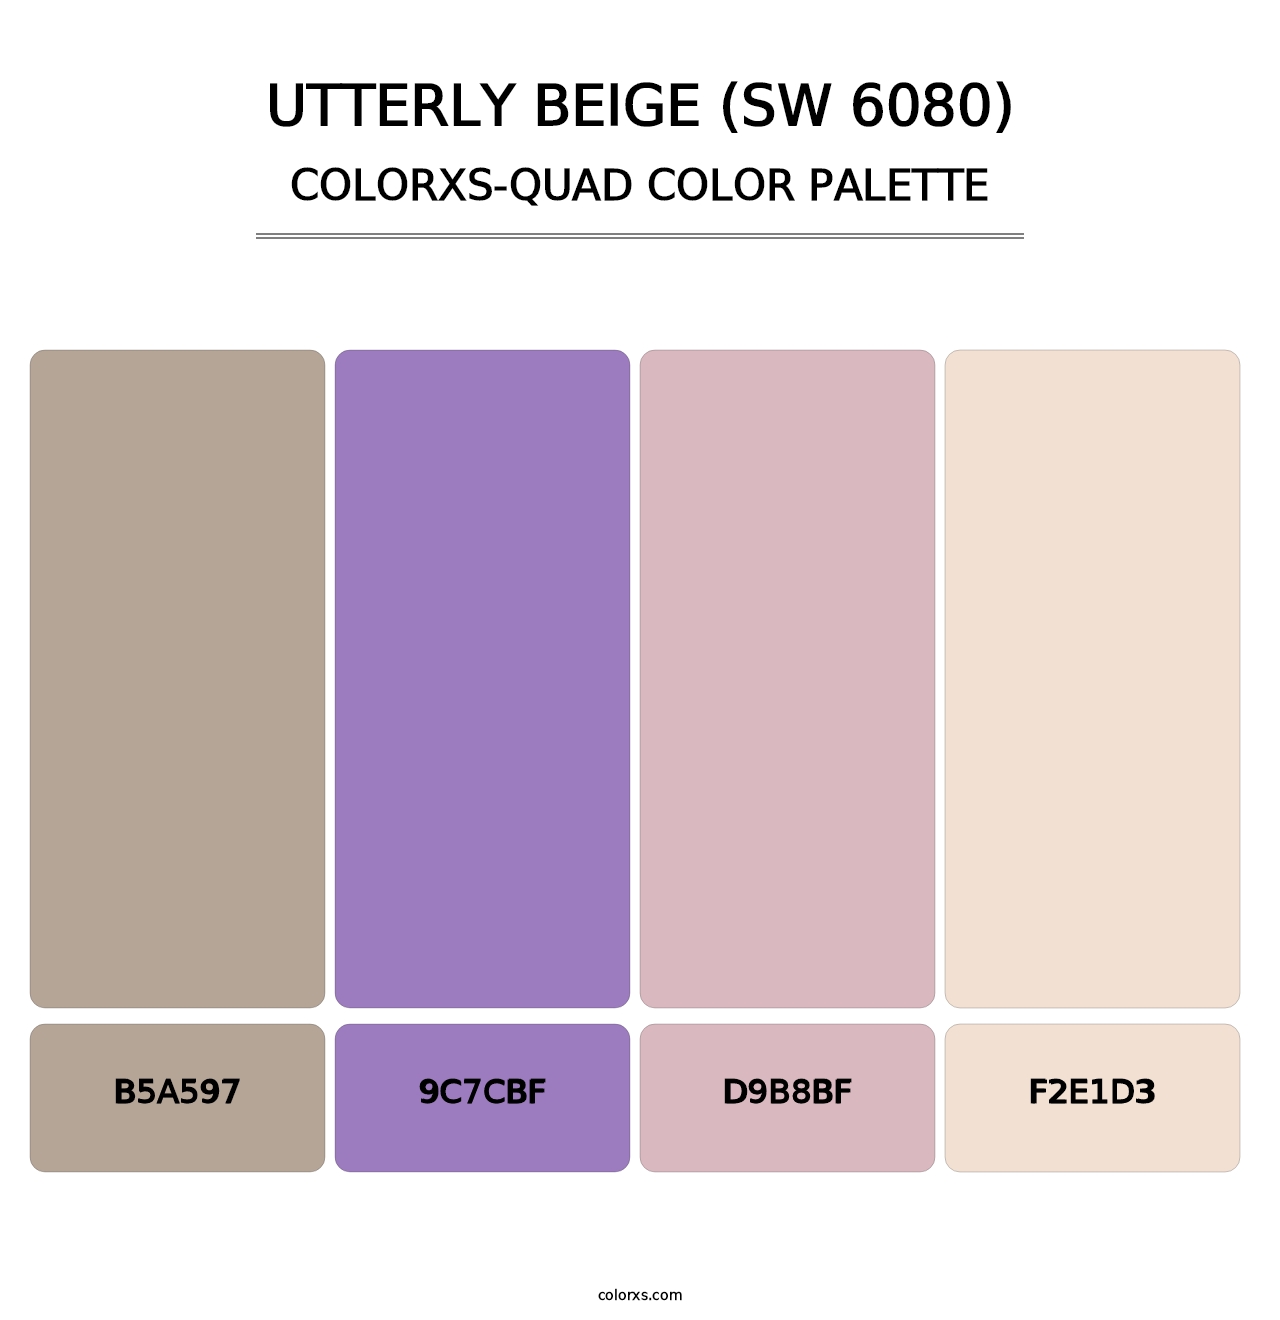 Utterly Beige (SW 6080) - Colorxs Quad Palette